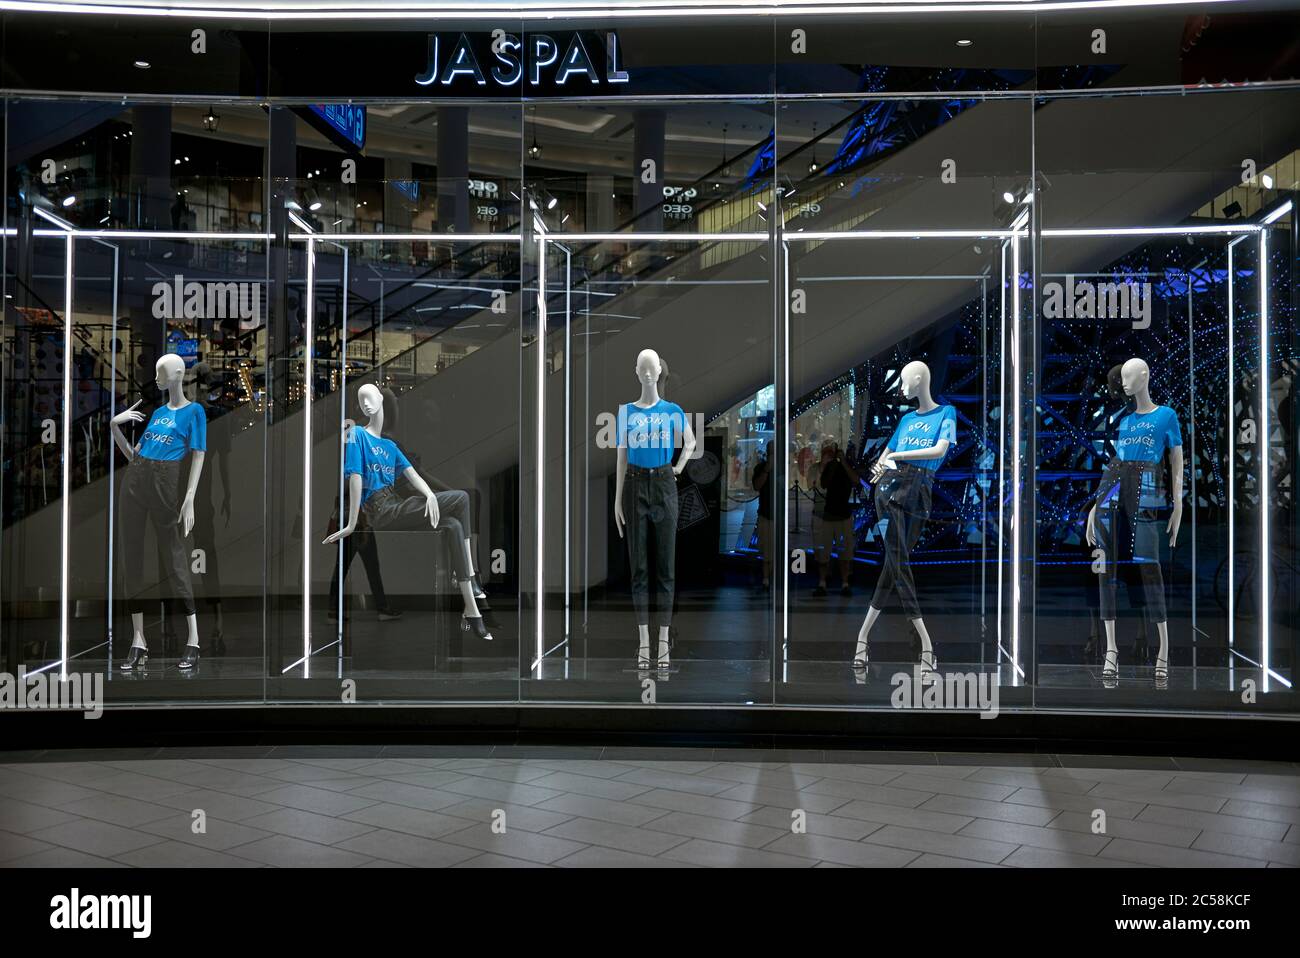 Window fashion display of female clothes. Stock Photo